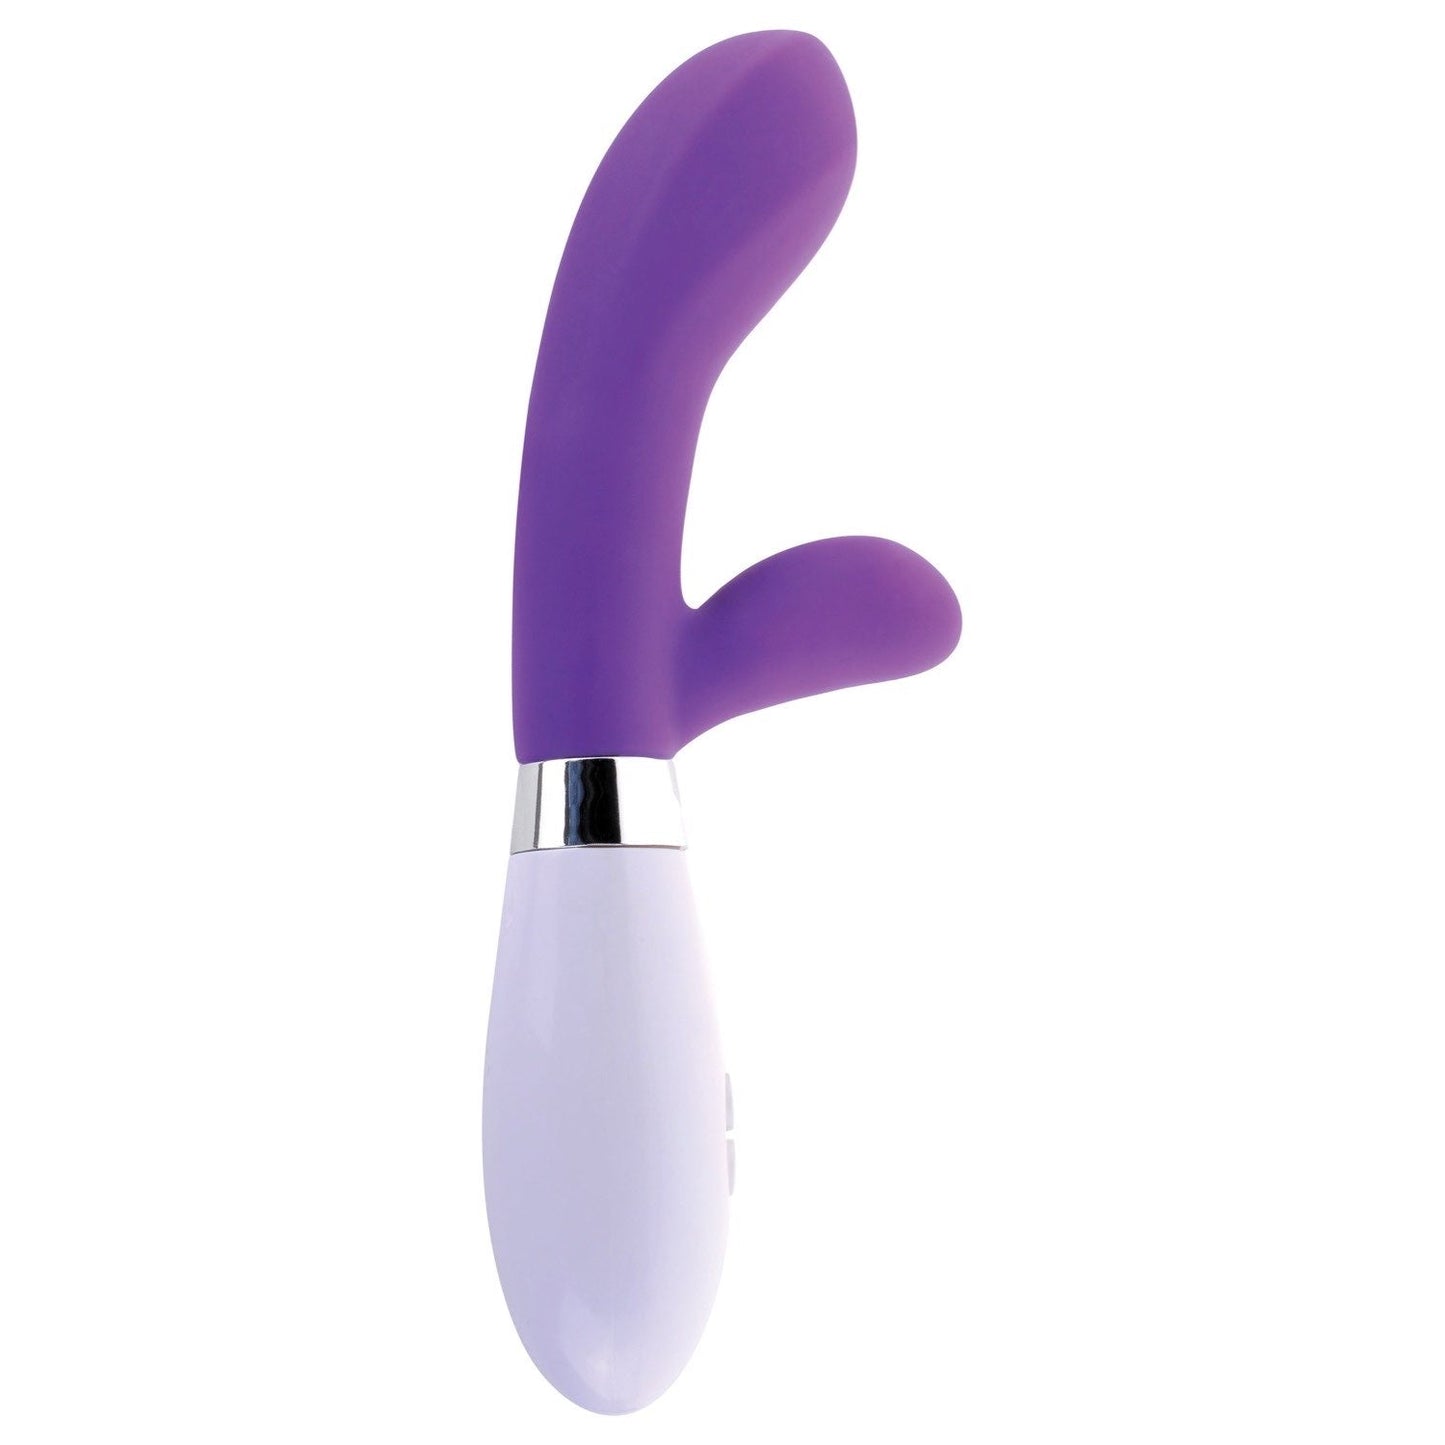 Silicone G-Spot Rabbit - Purple 20.3 cm (8") Rabbit Vibrator